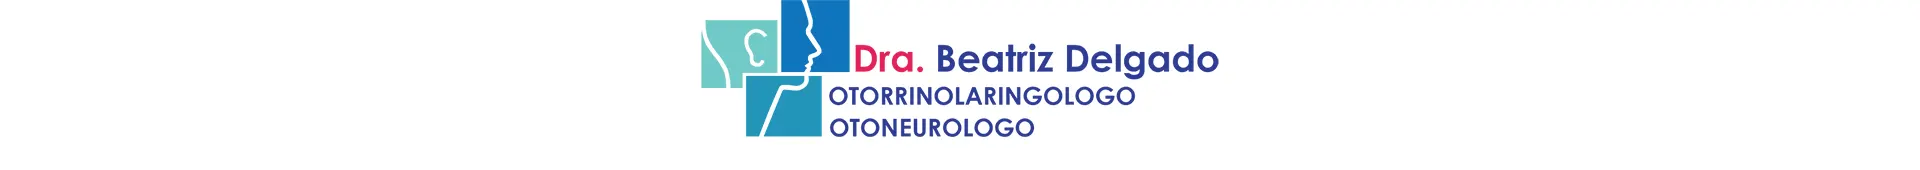 Imagen 1 del perfil de Dra. Beatriz Delgado